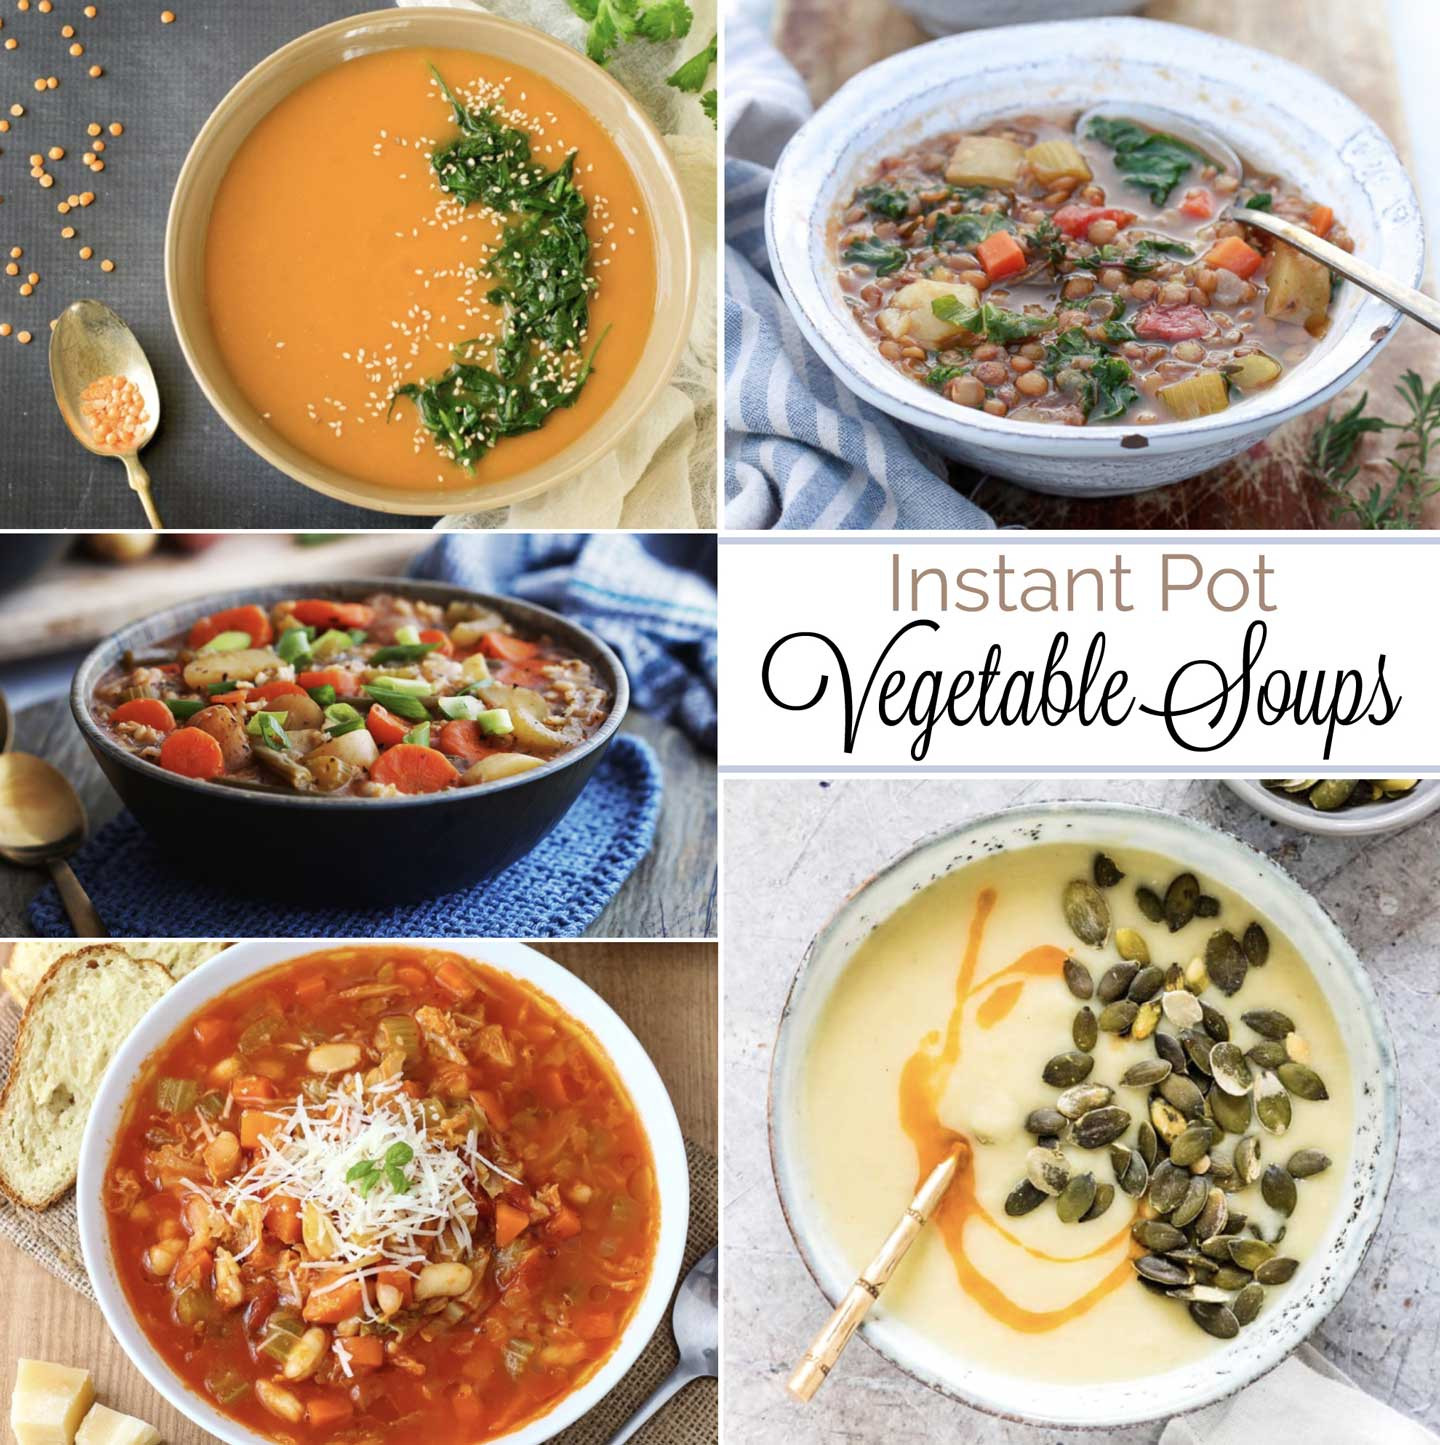 Healthy Instant Pot Recipes Vegetarian
 Nourishing Instant Pot Ve able Soup Recipes Two